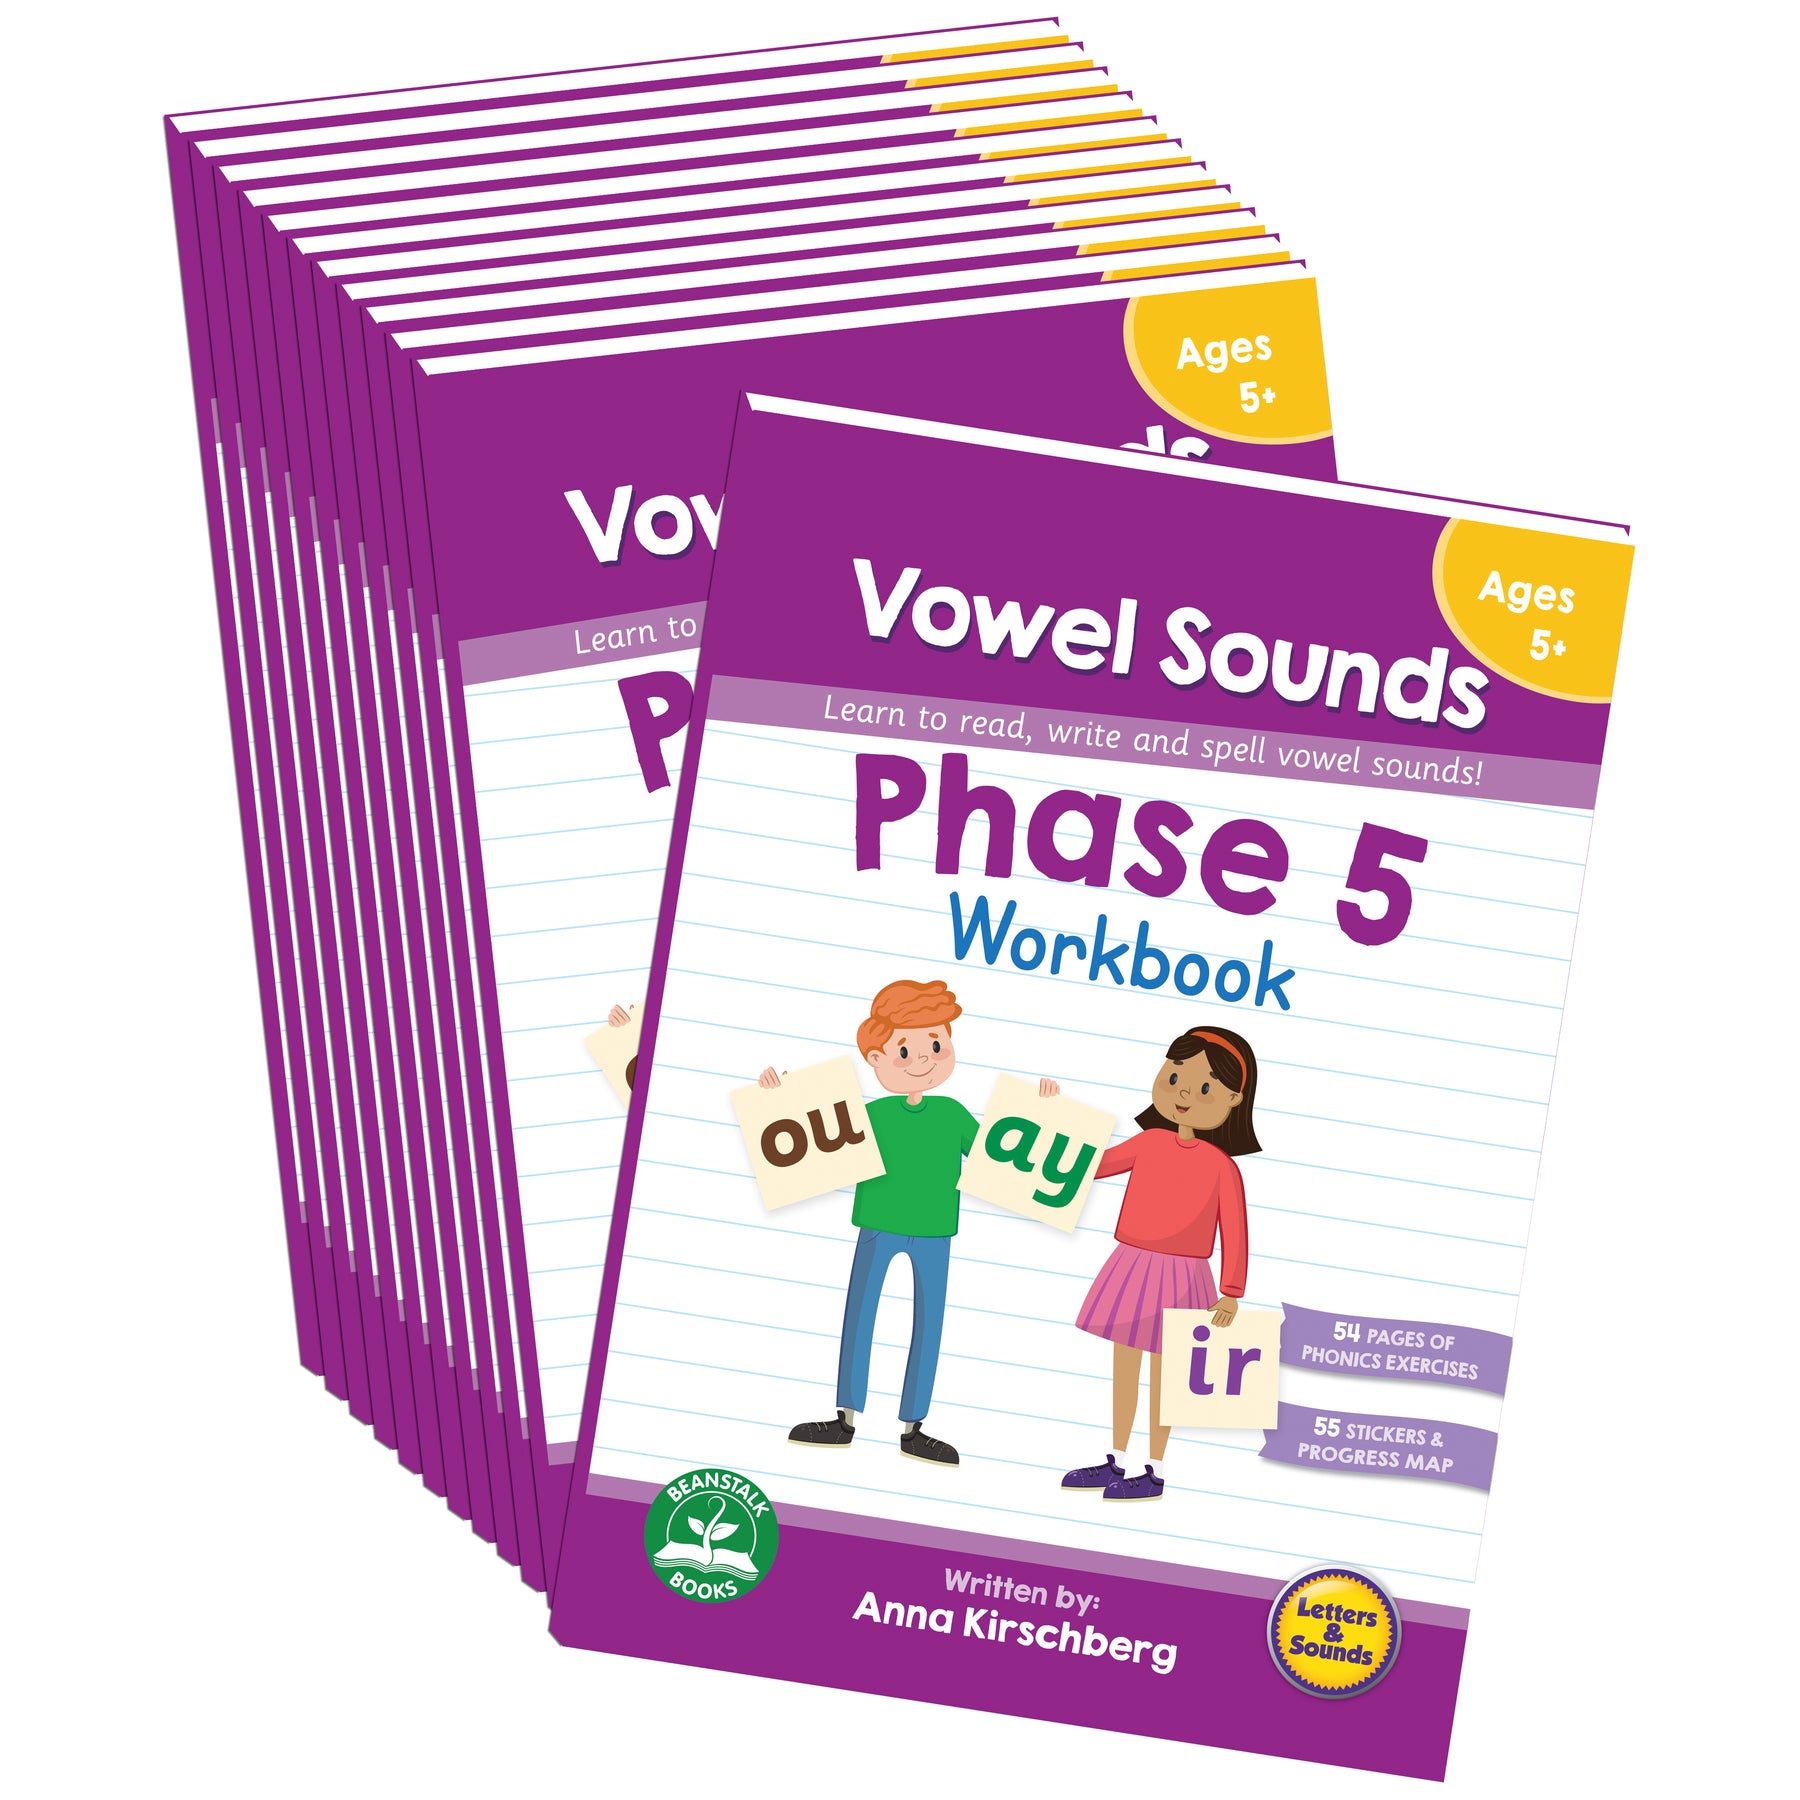 Phase 5 Vowel Sounds Workbook - 12 Pack